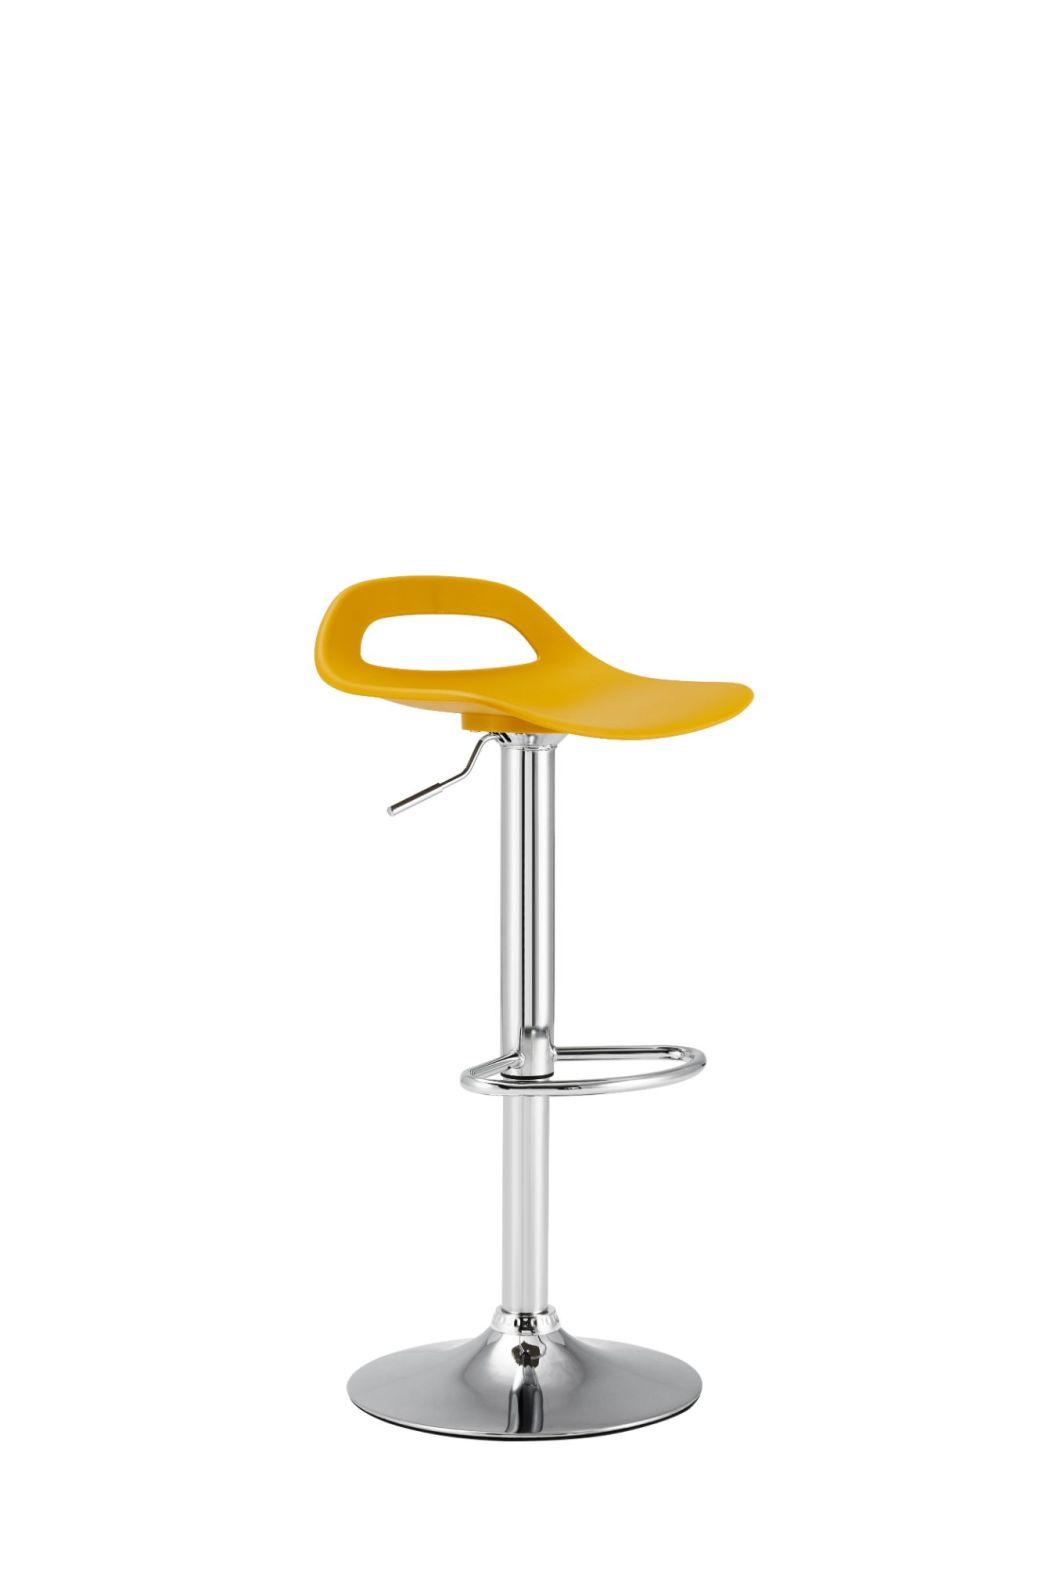 Fiber Plastic Bar Furniture with Chrome Frame Adjustable Seat Bar Chair